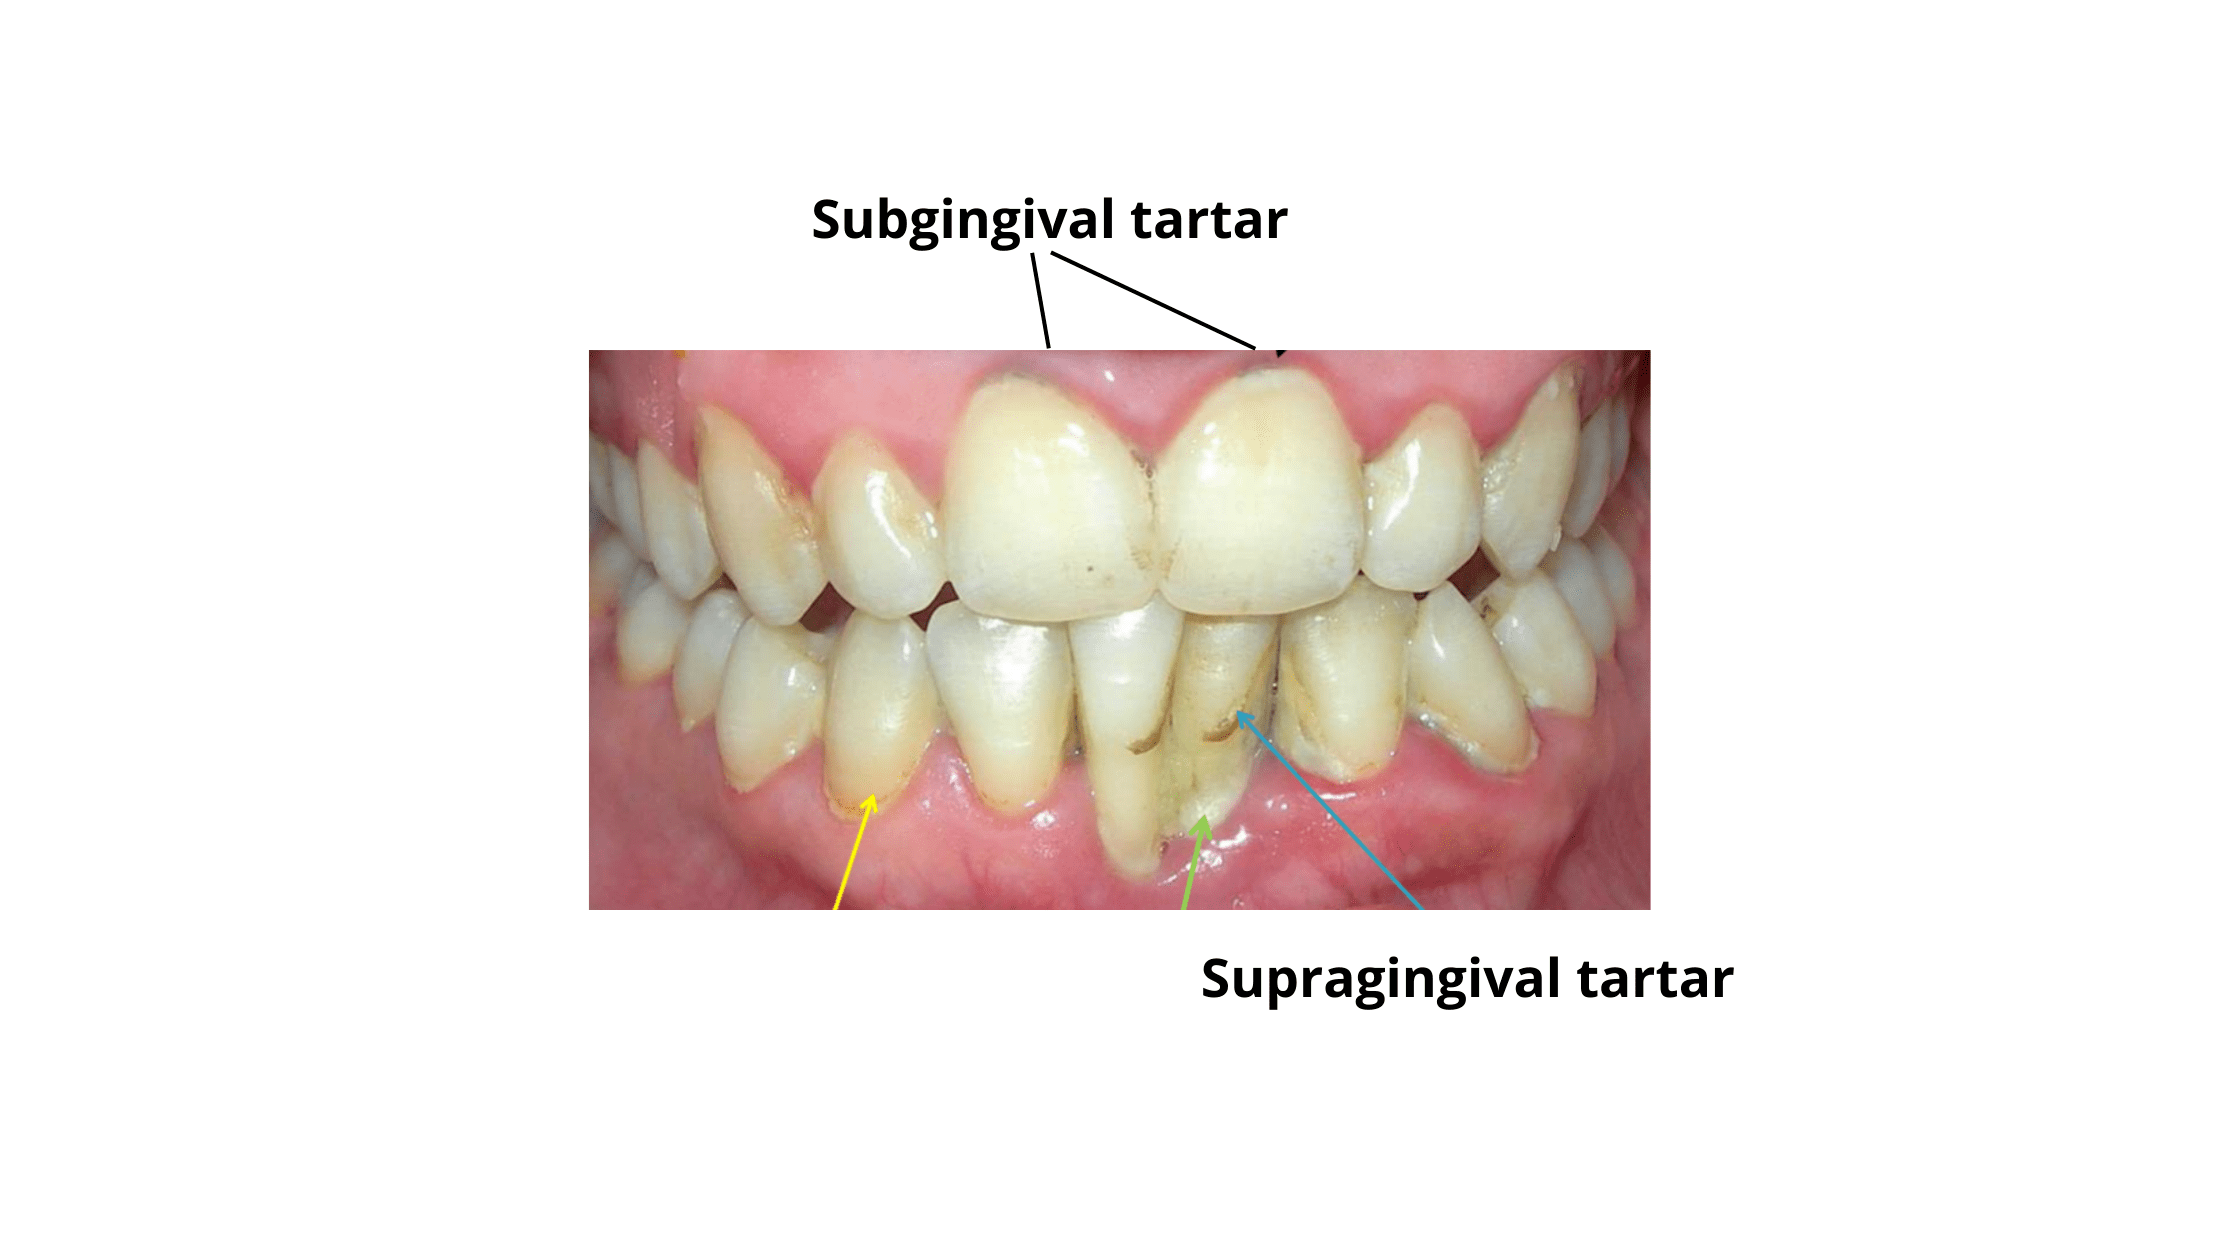 subgingival tartar and supragingival tartar